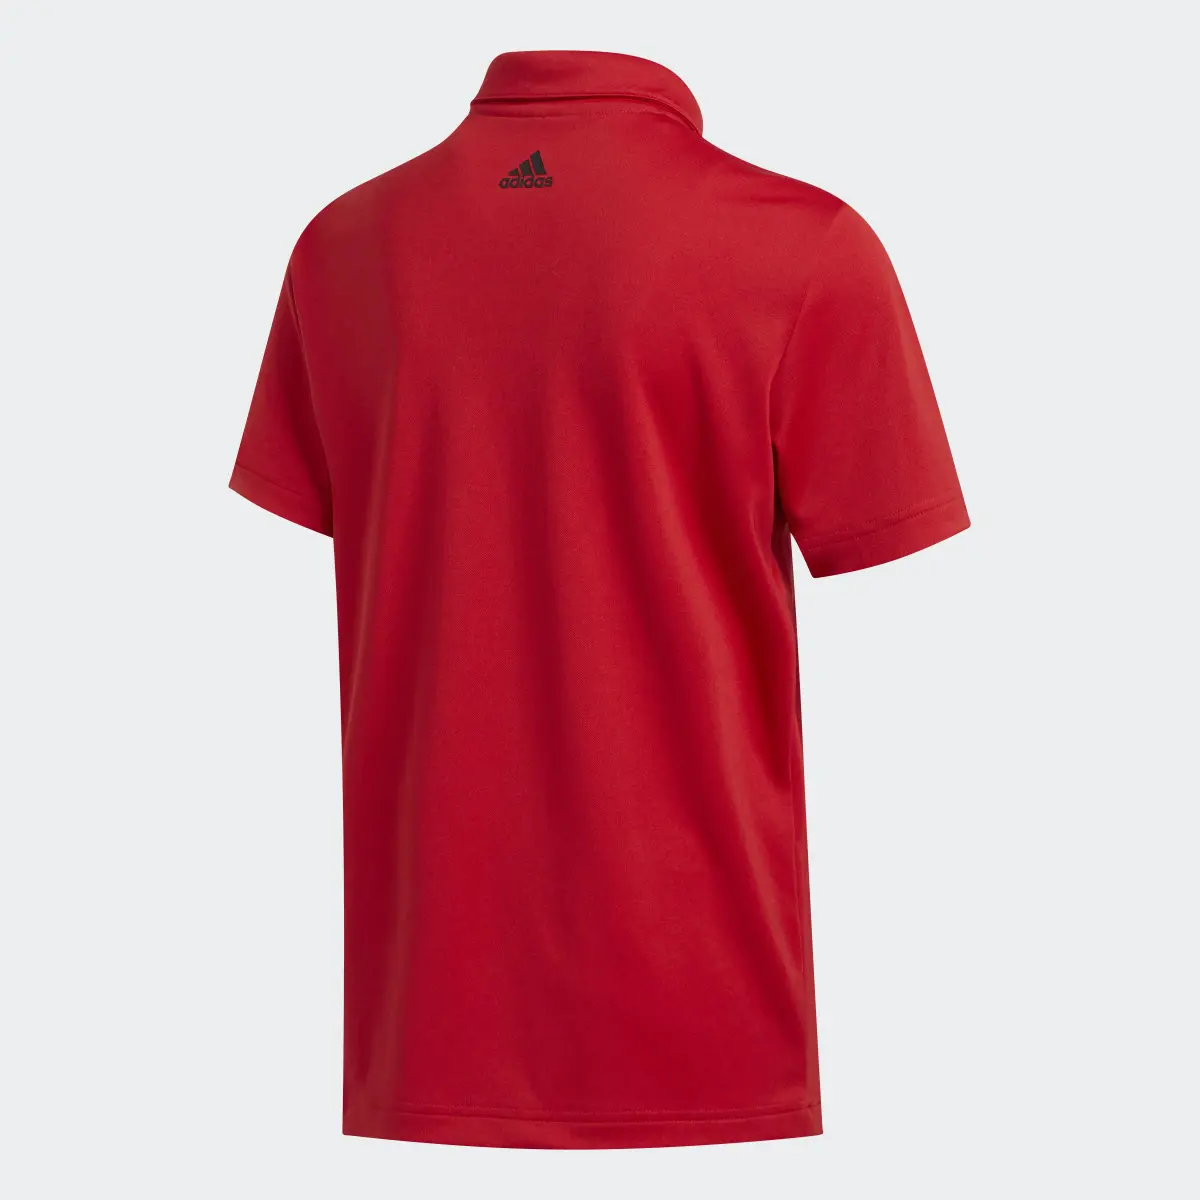 Adidas 3-Stripes Golf Polo Shirt. 2